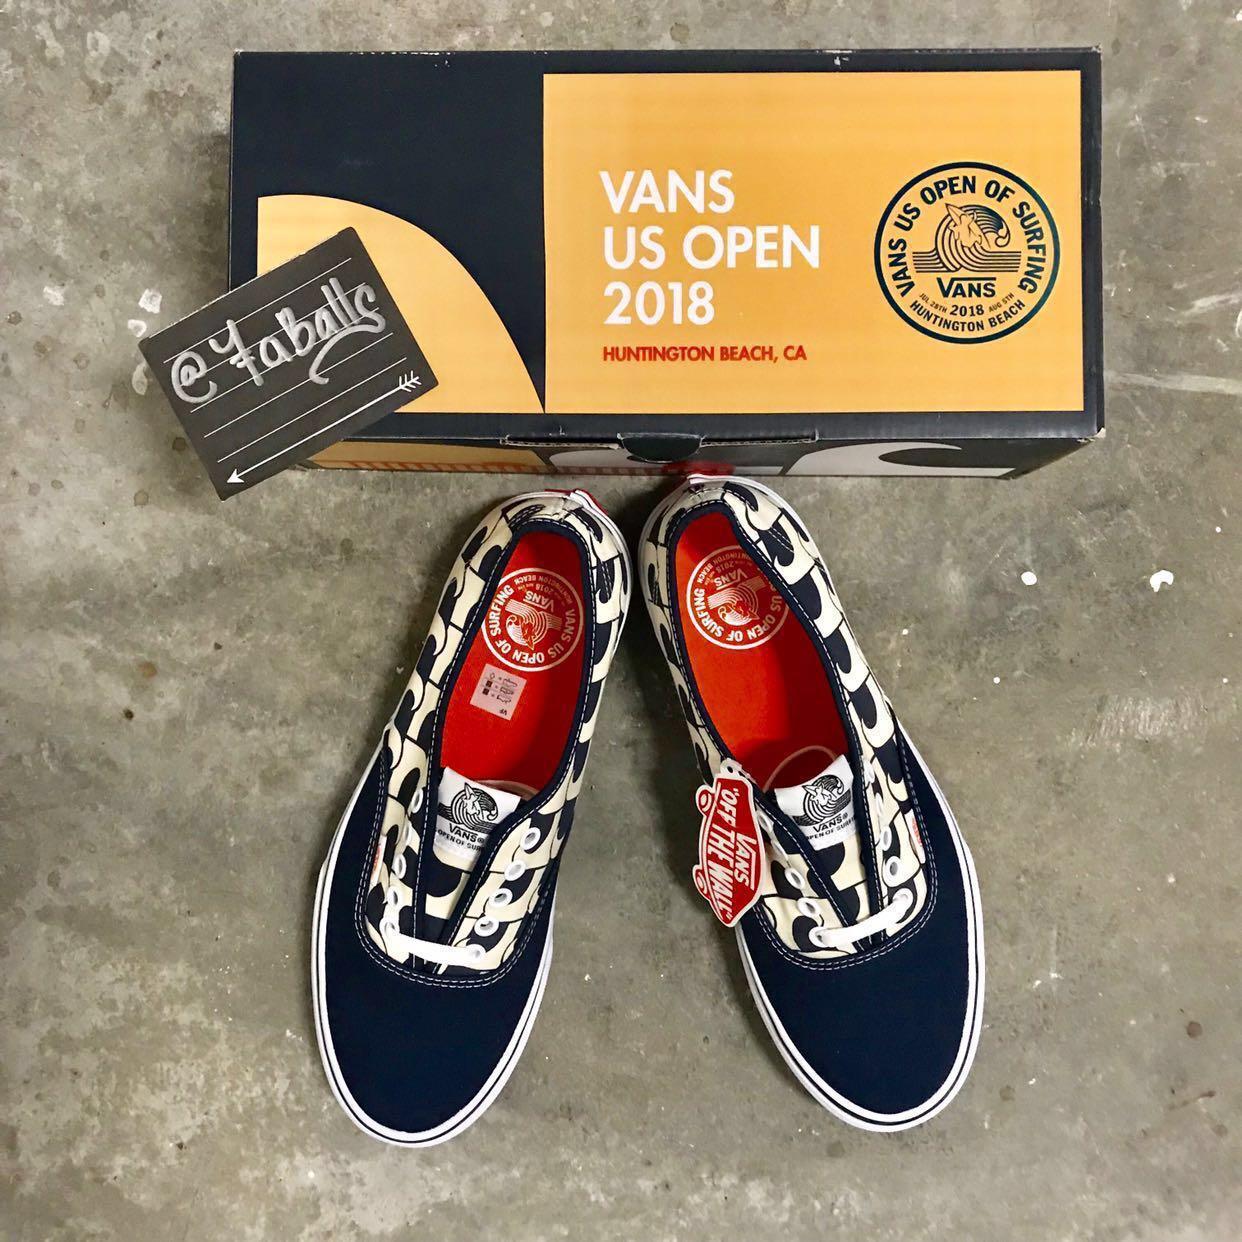 us open vans 2018 shoes